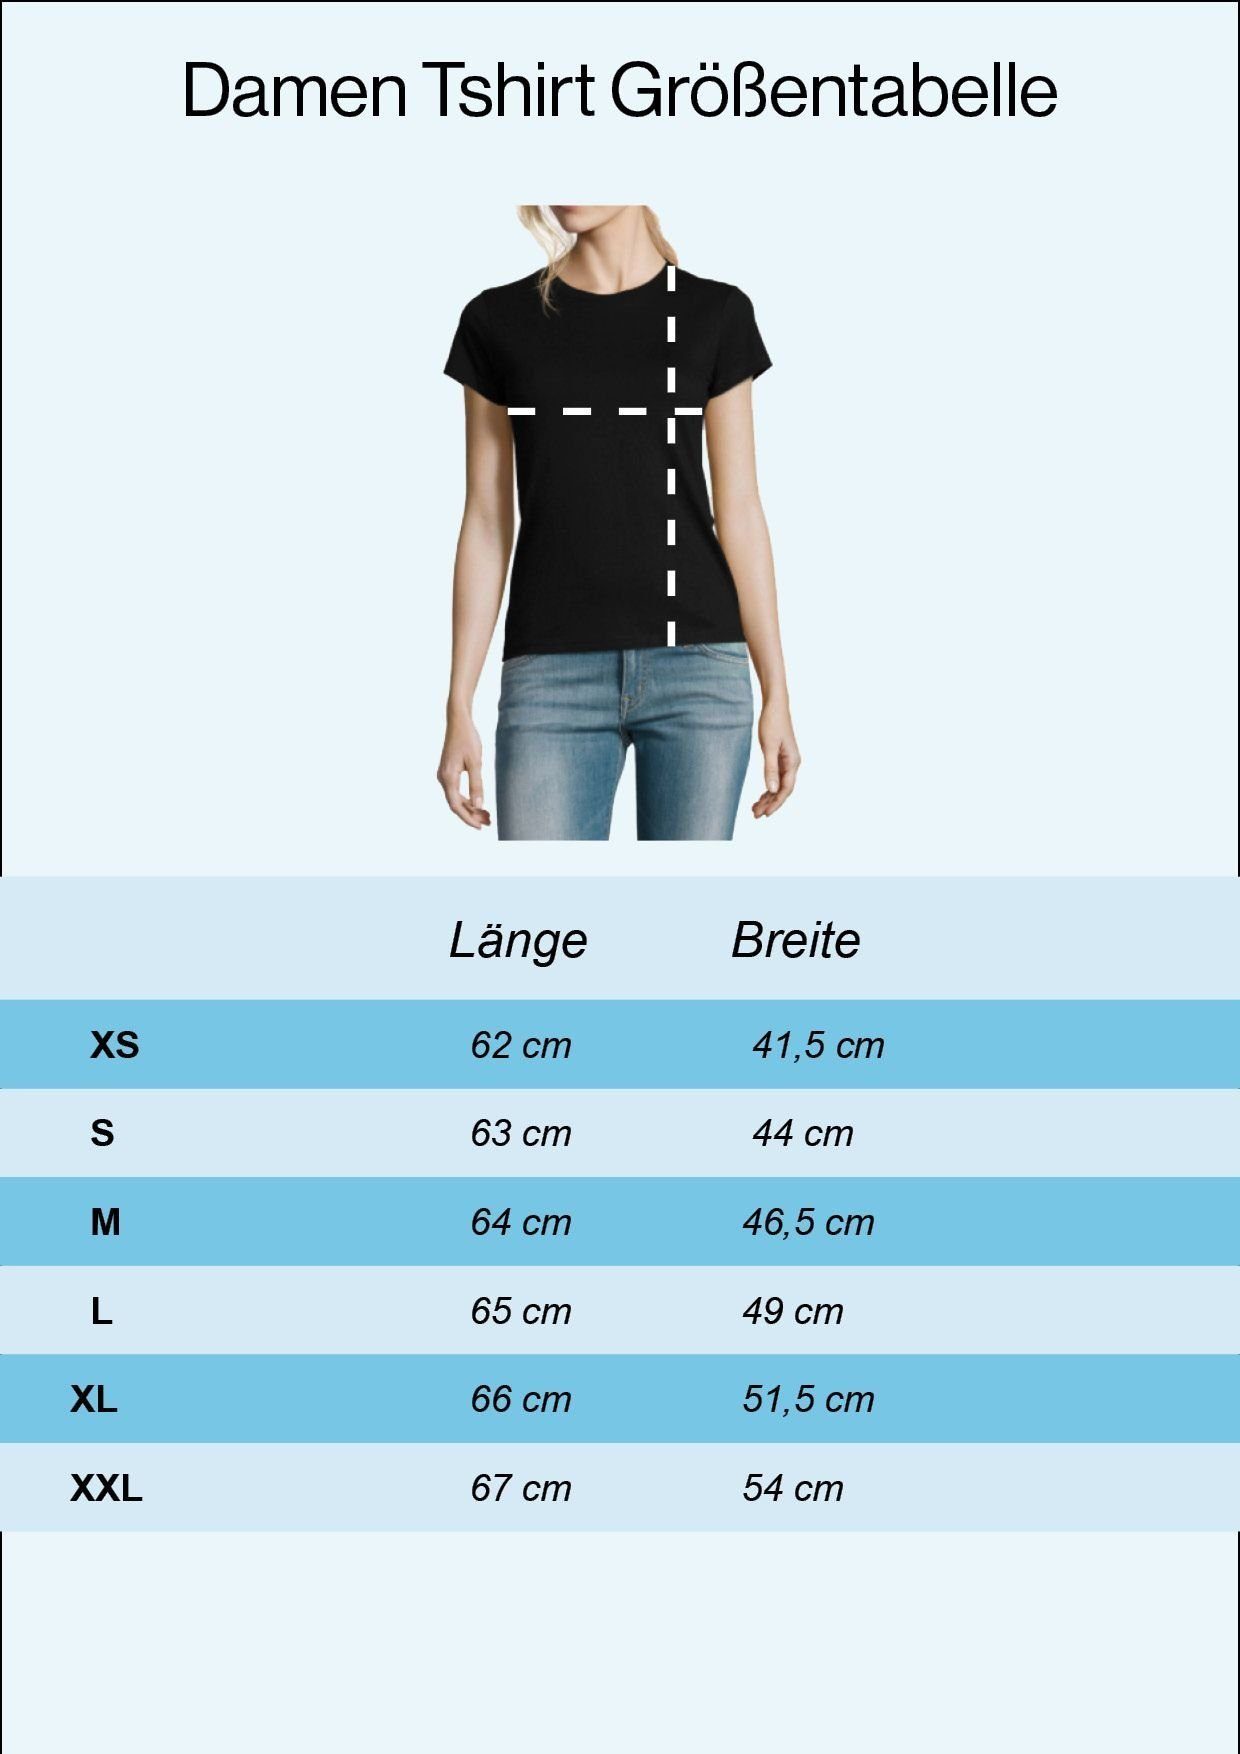 Youth Designz T-Shirt England Britain trendigem Damen Motiv Shirt mit Navyblau